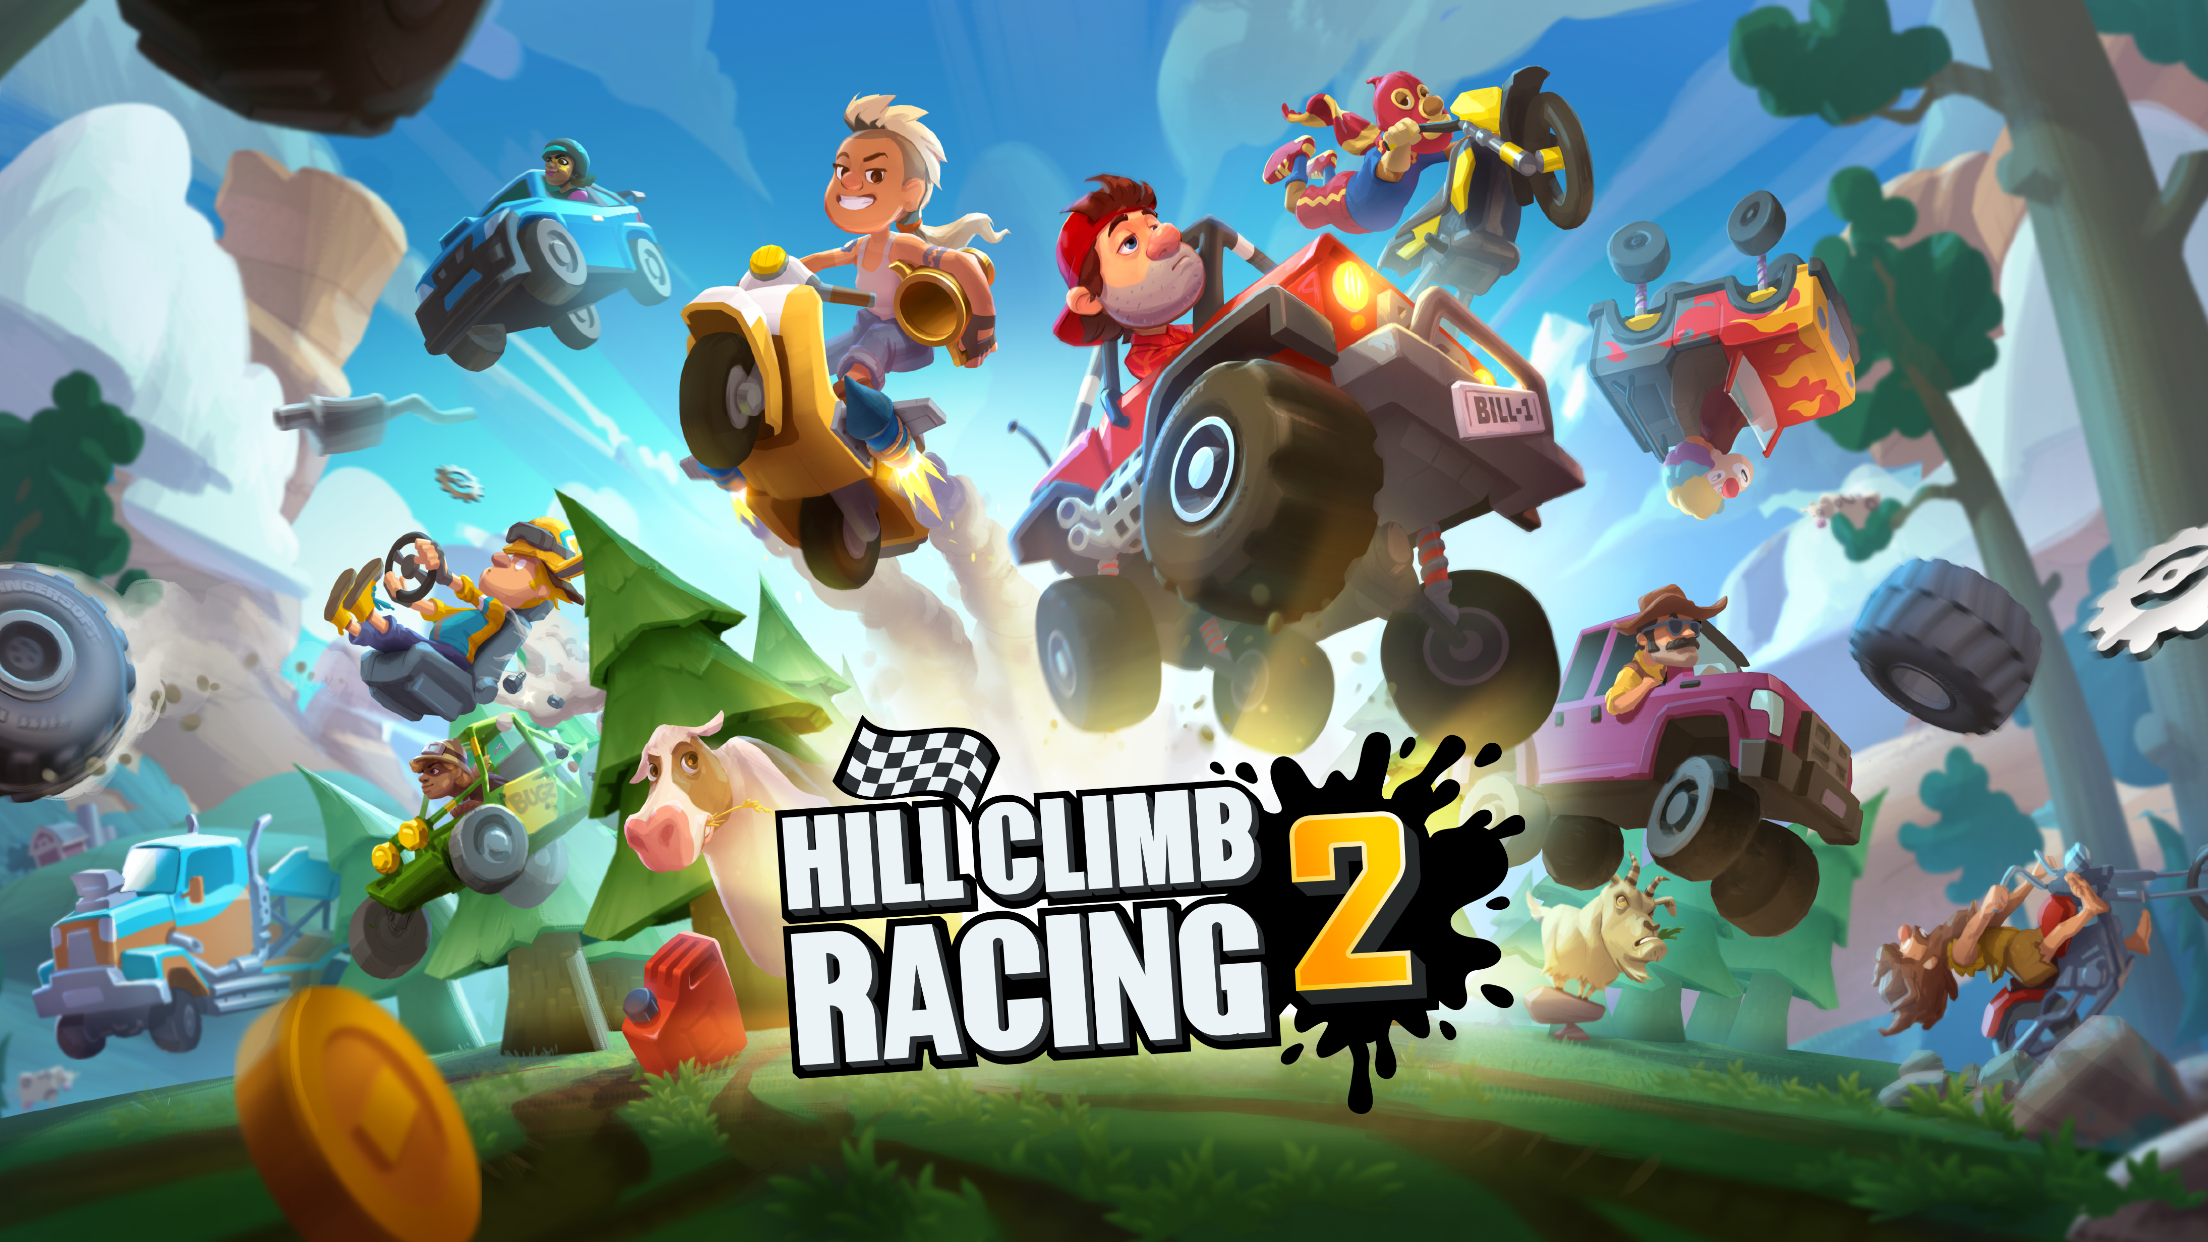 Hill Climb Racing 2 MOD APK 1.58.1 (Unlimited Money, All Unlocked)